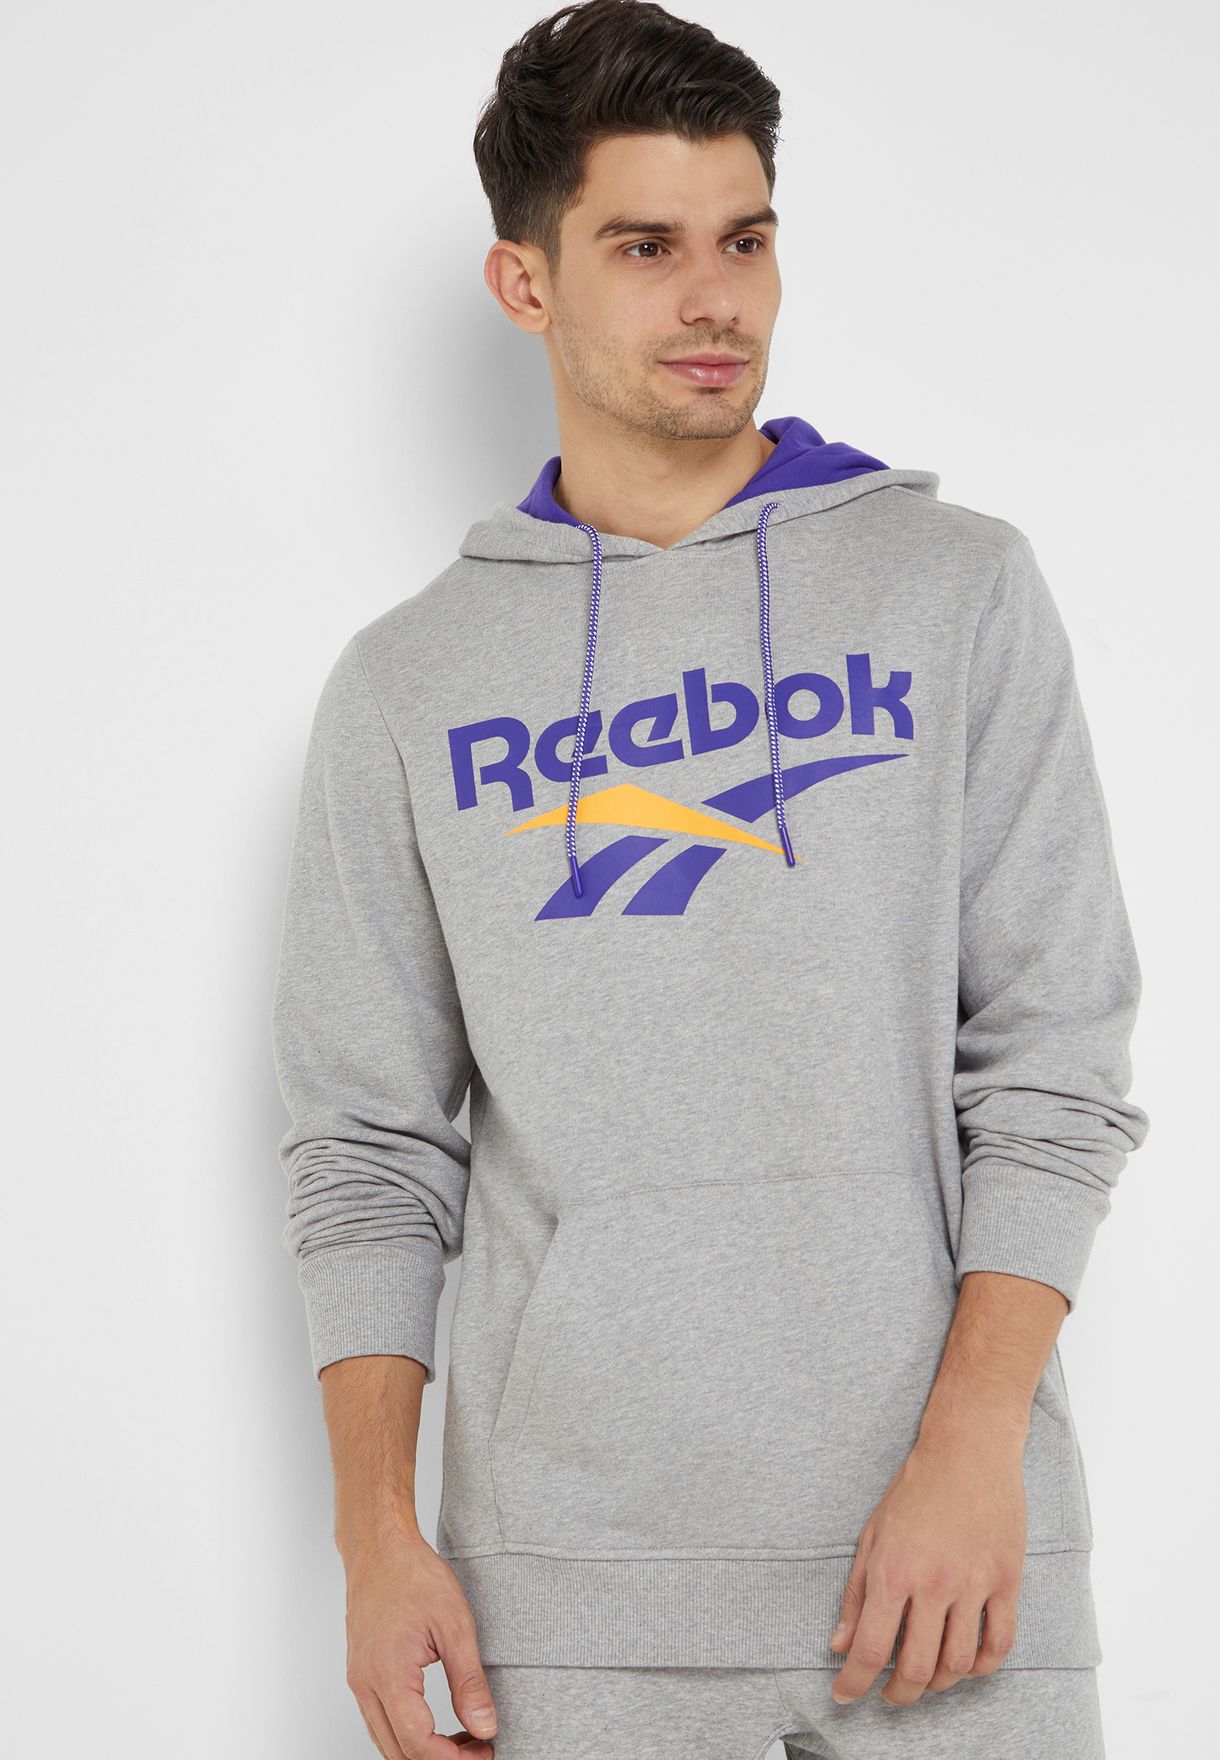 reebok classic vector hoodies